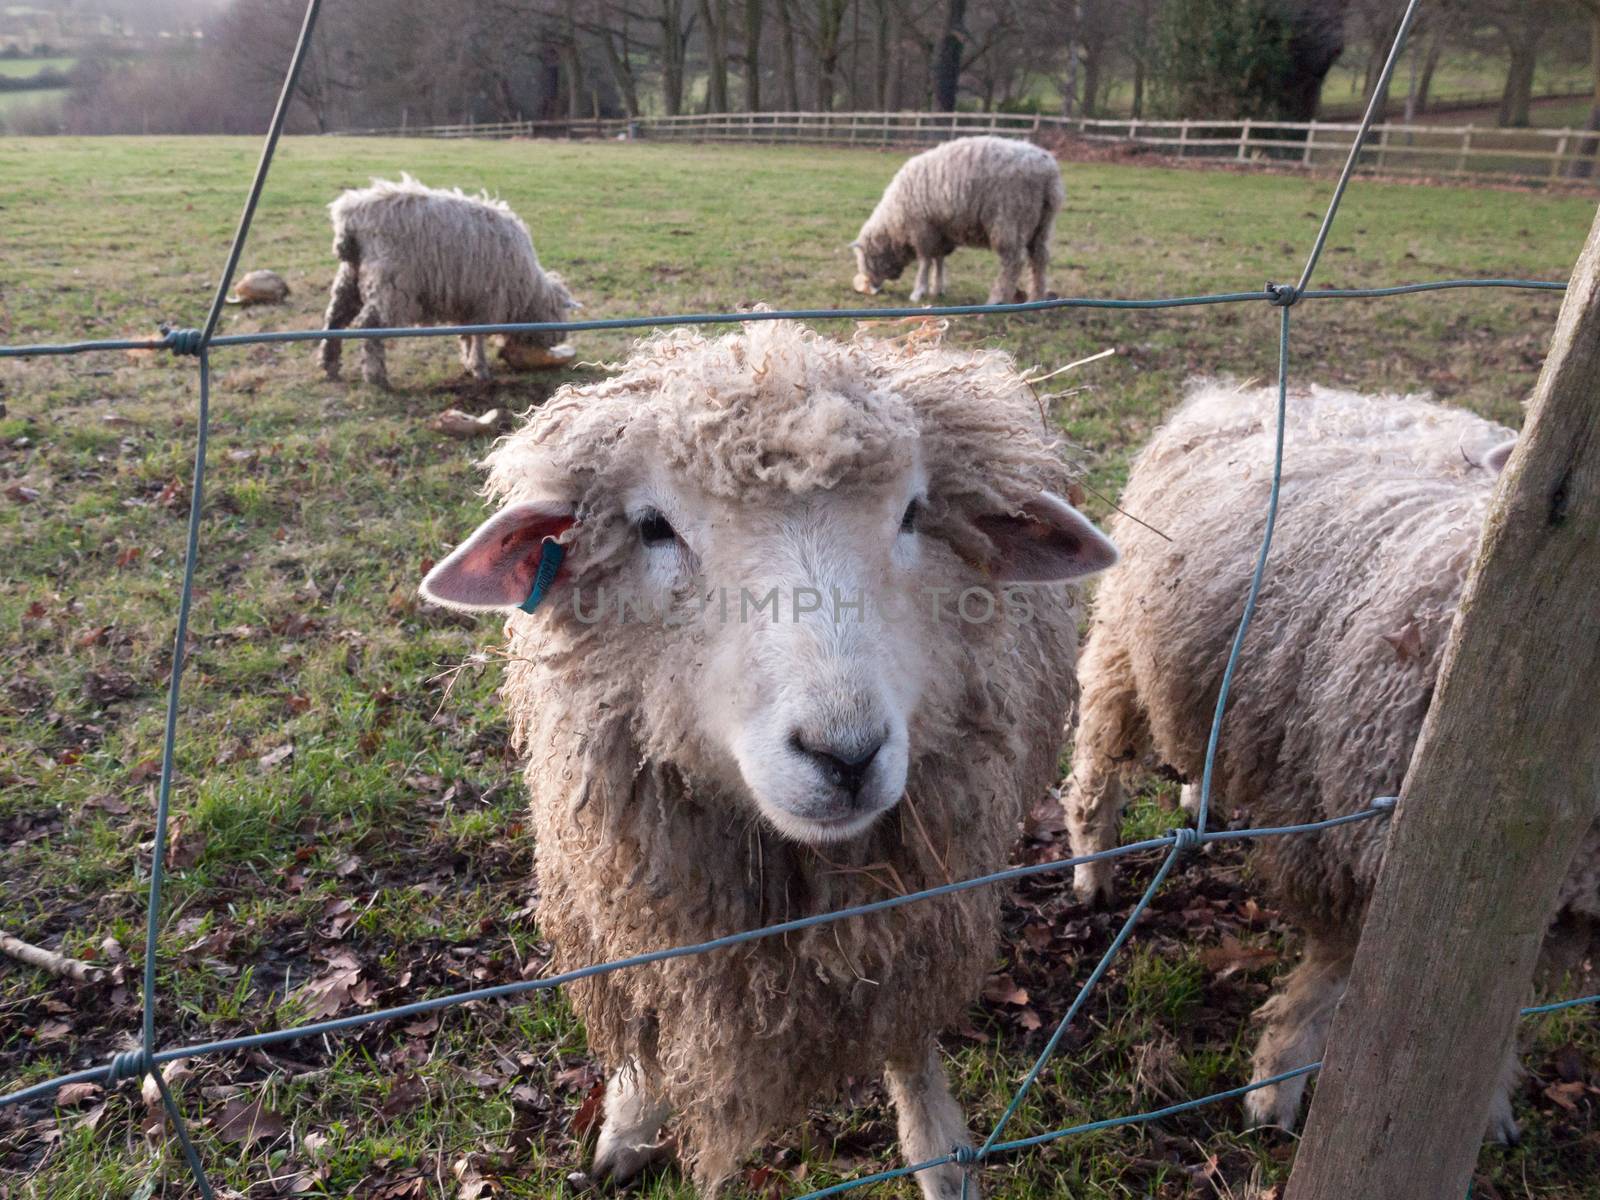 close up english uk farm sheep feeding grazing autumn cold; essex; england; uk